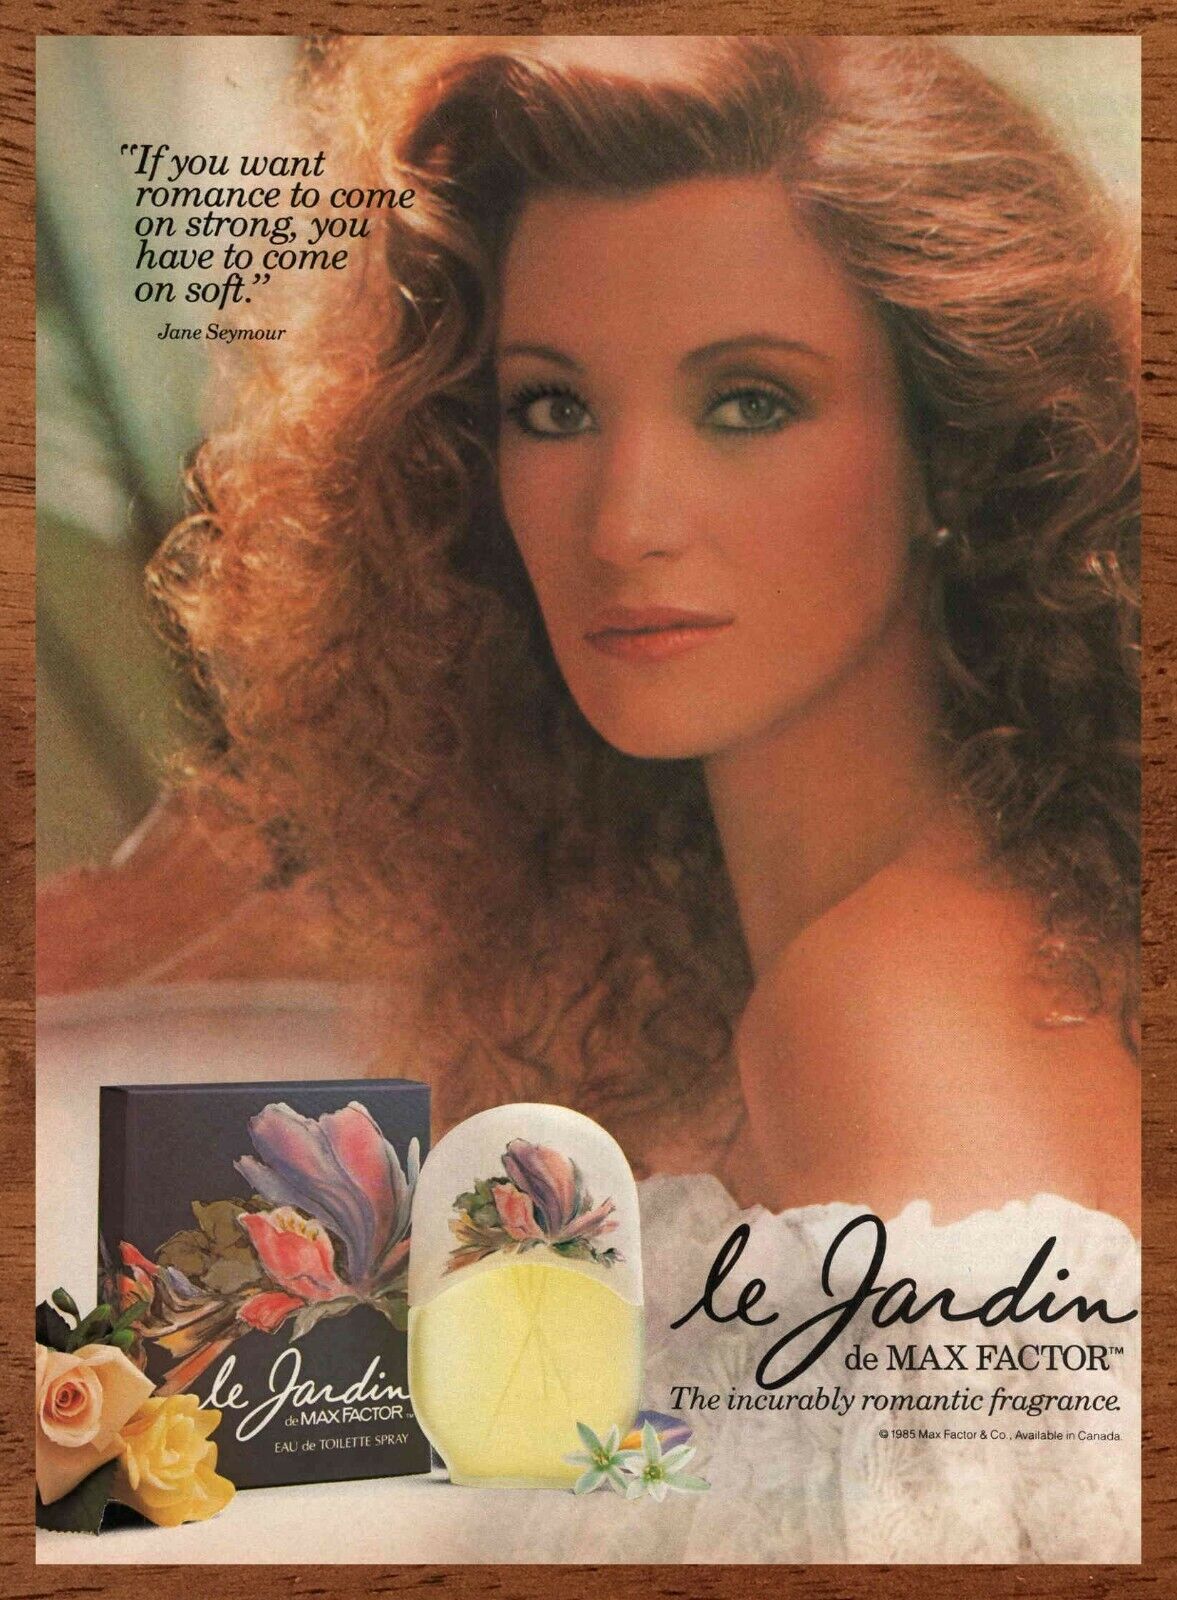 1986 Max Factor Le Jardin Fragrance Vintage Print Ad/Poster Jane Seymour  80s 縺ｮeBay蜈ｬ隱肴ｵｷ螟夜�夊ｲｩ�ｽ懊そ繧ｫ繧､繝｢繝ｳ